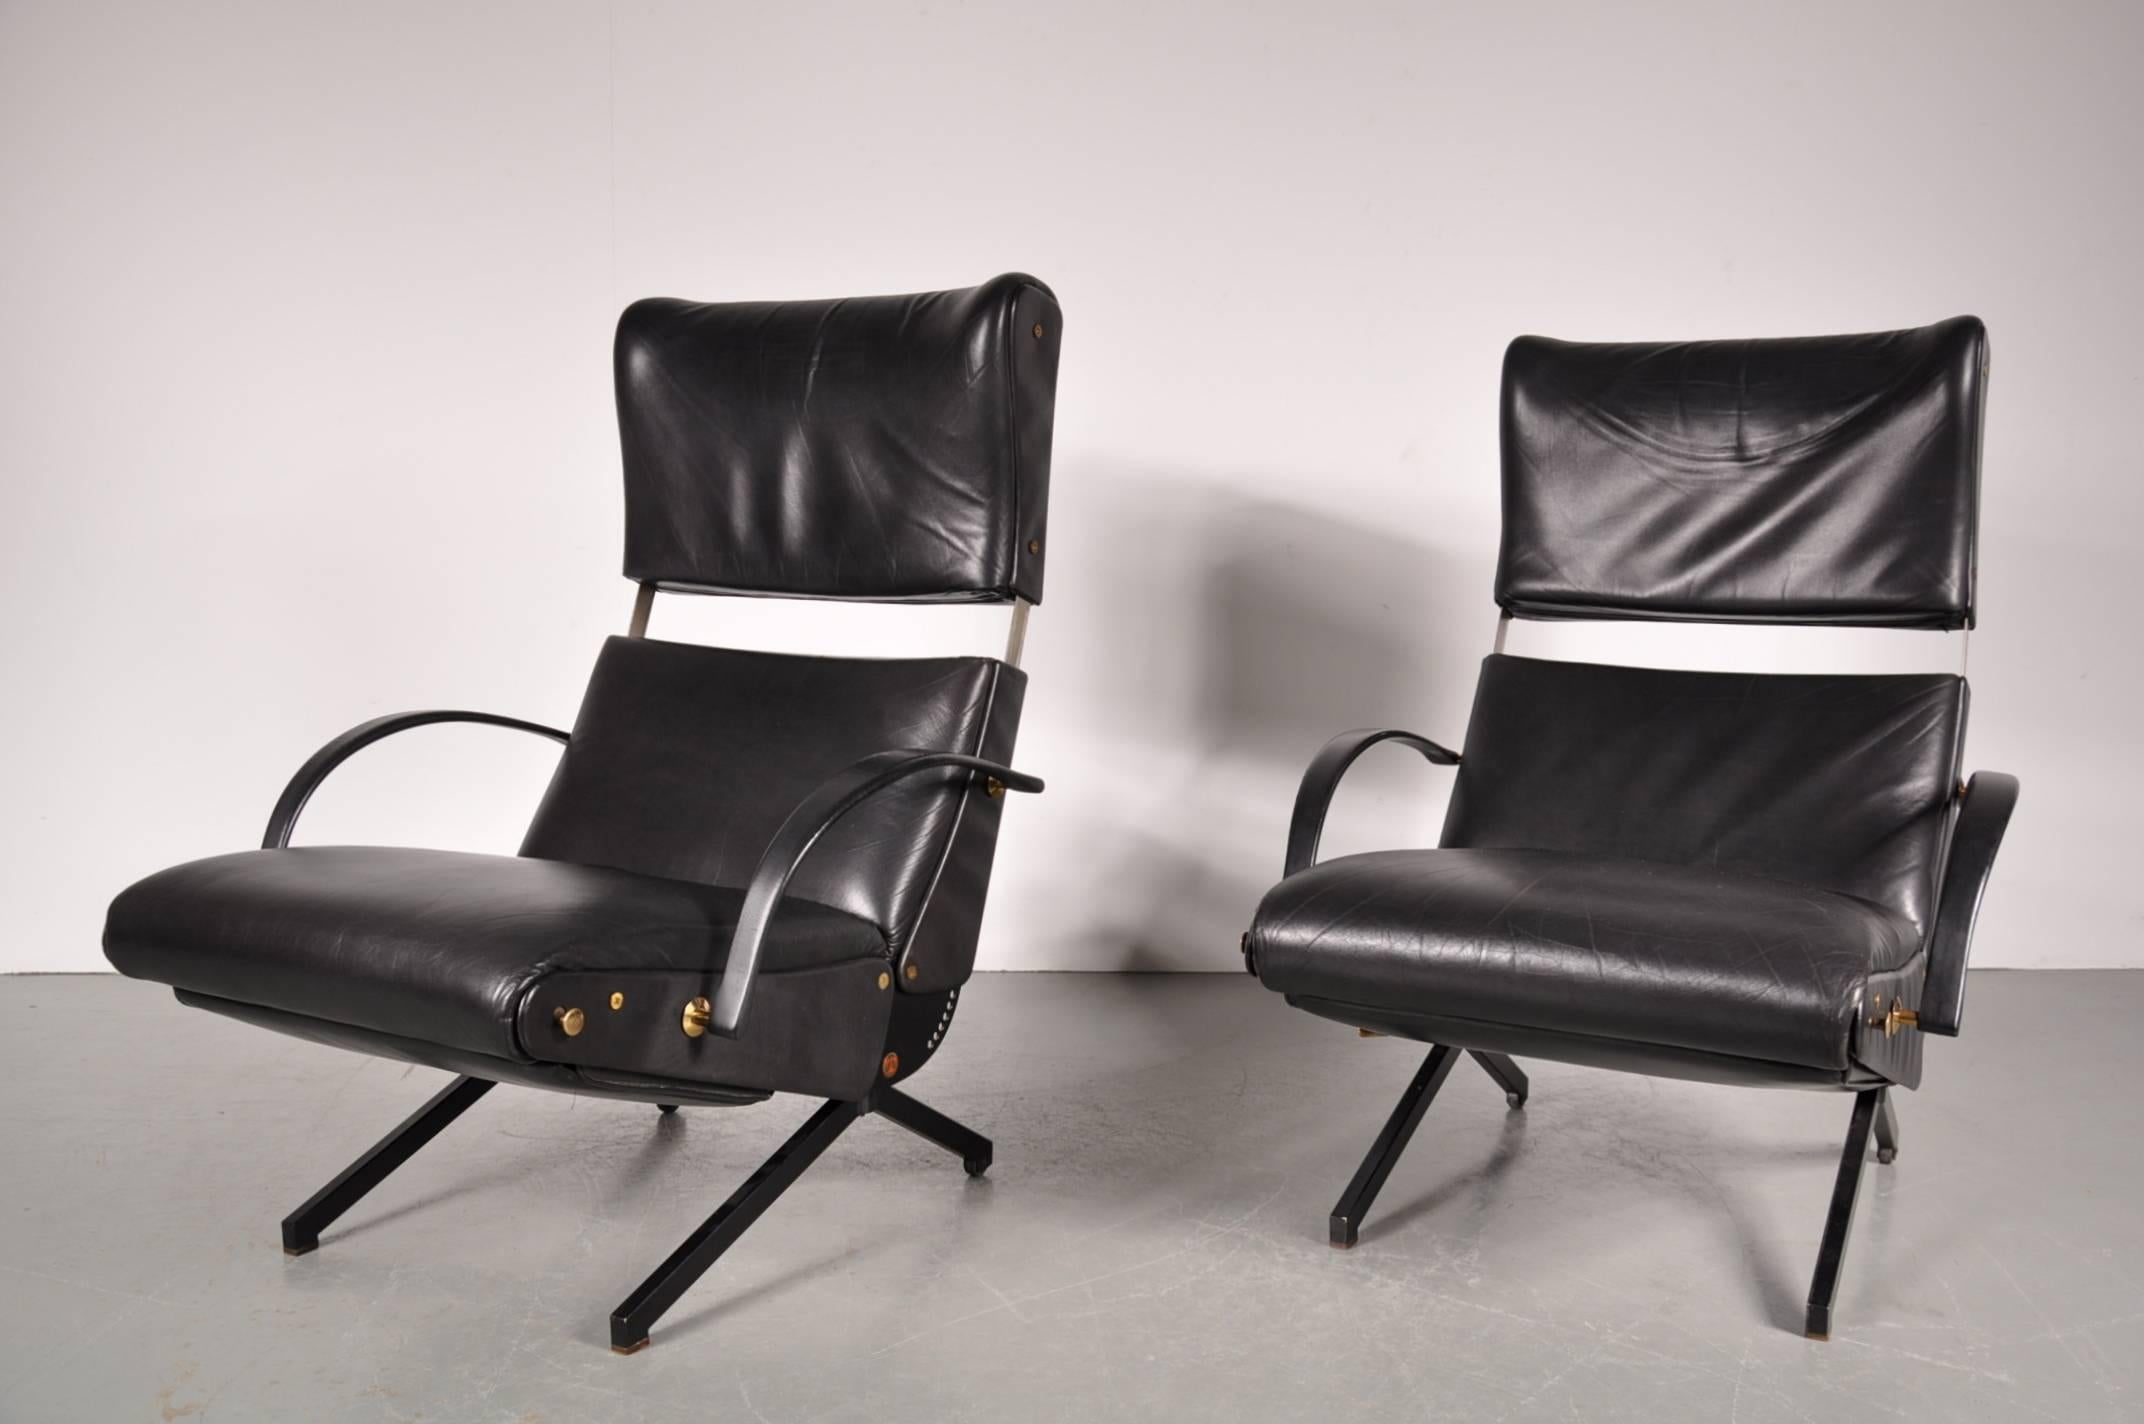 Metal Lounge Chair Model P40 by Osvaldo Borsani for Tecno, Italy, 1956